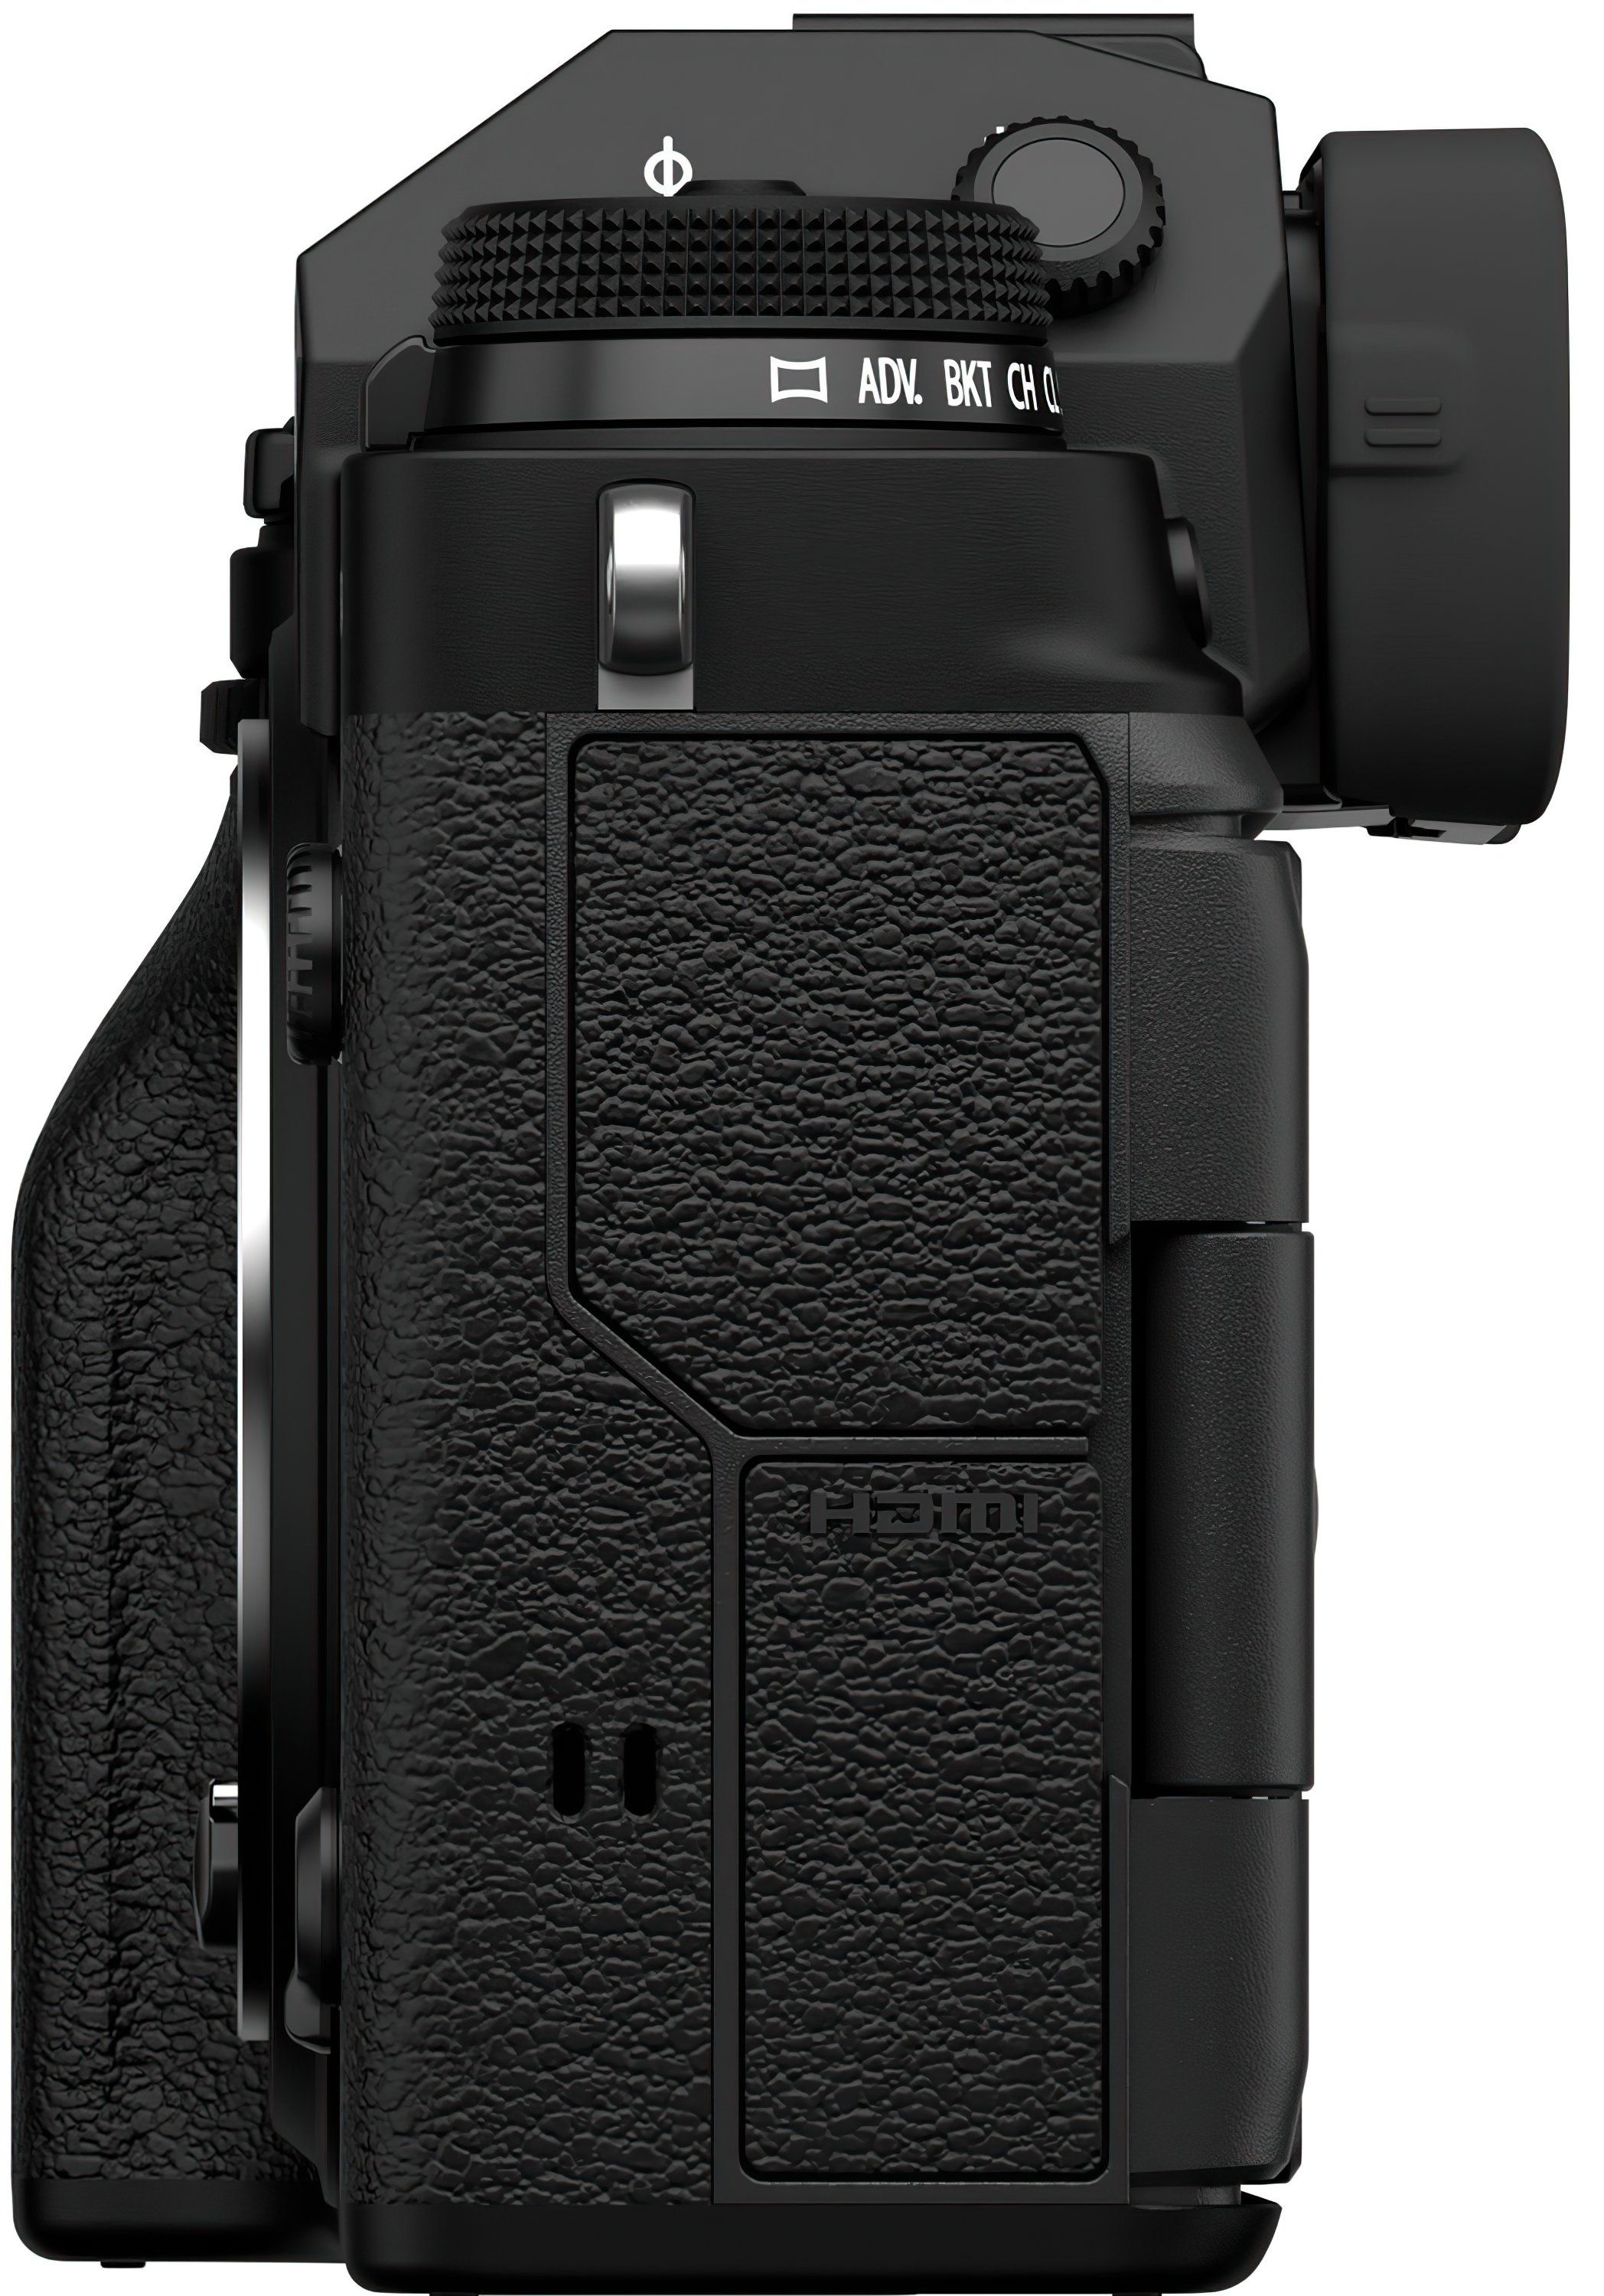 Fujifilm X-T4 Body Black (РСТ)